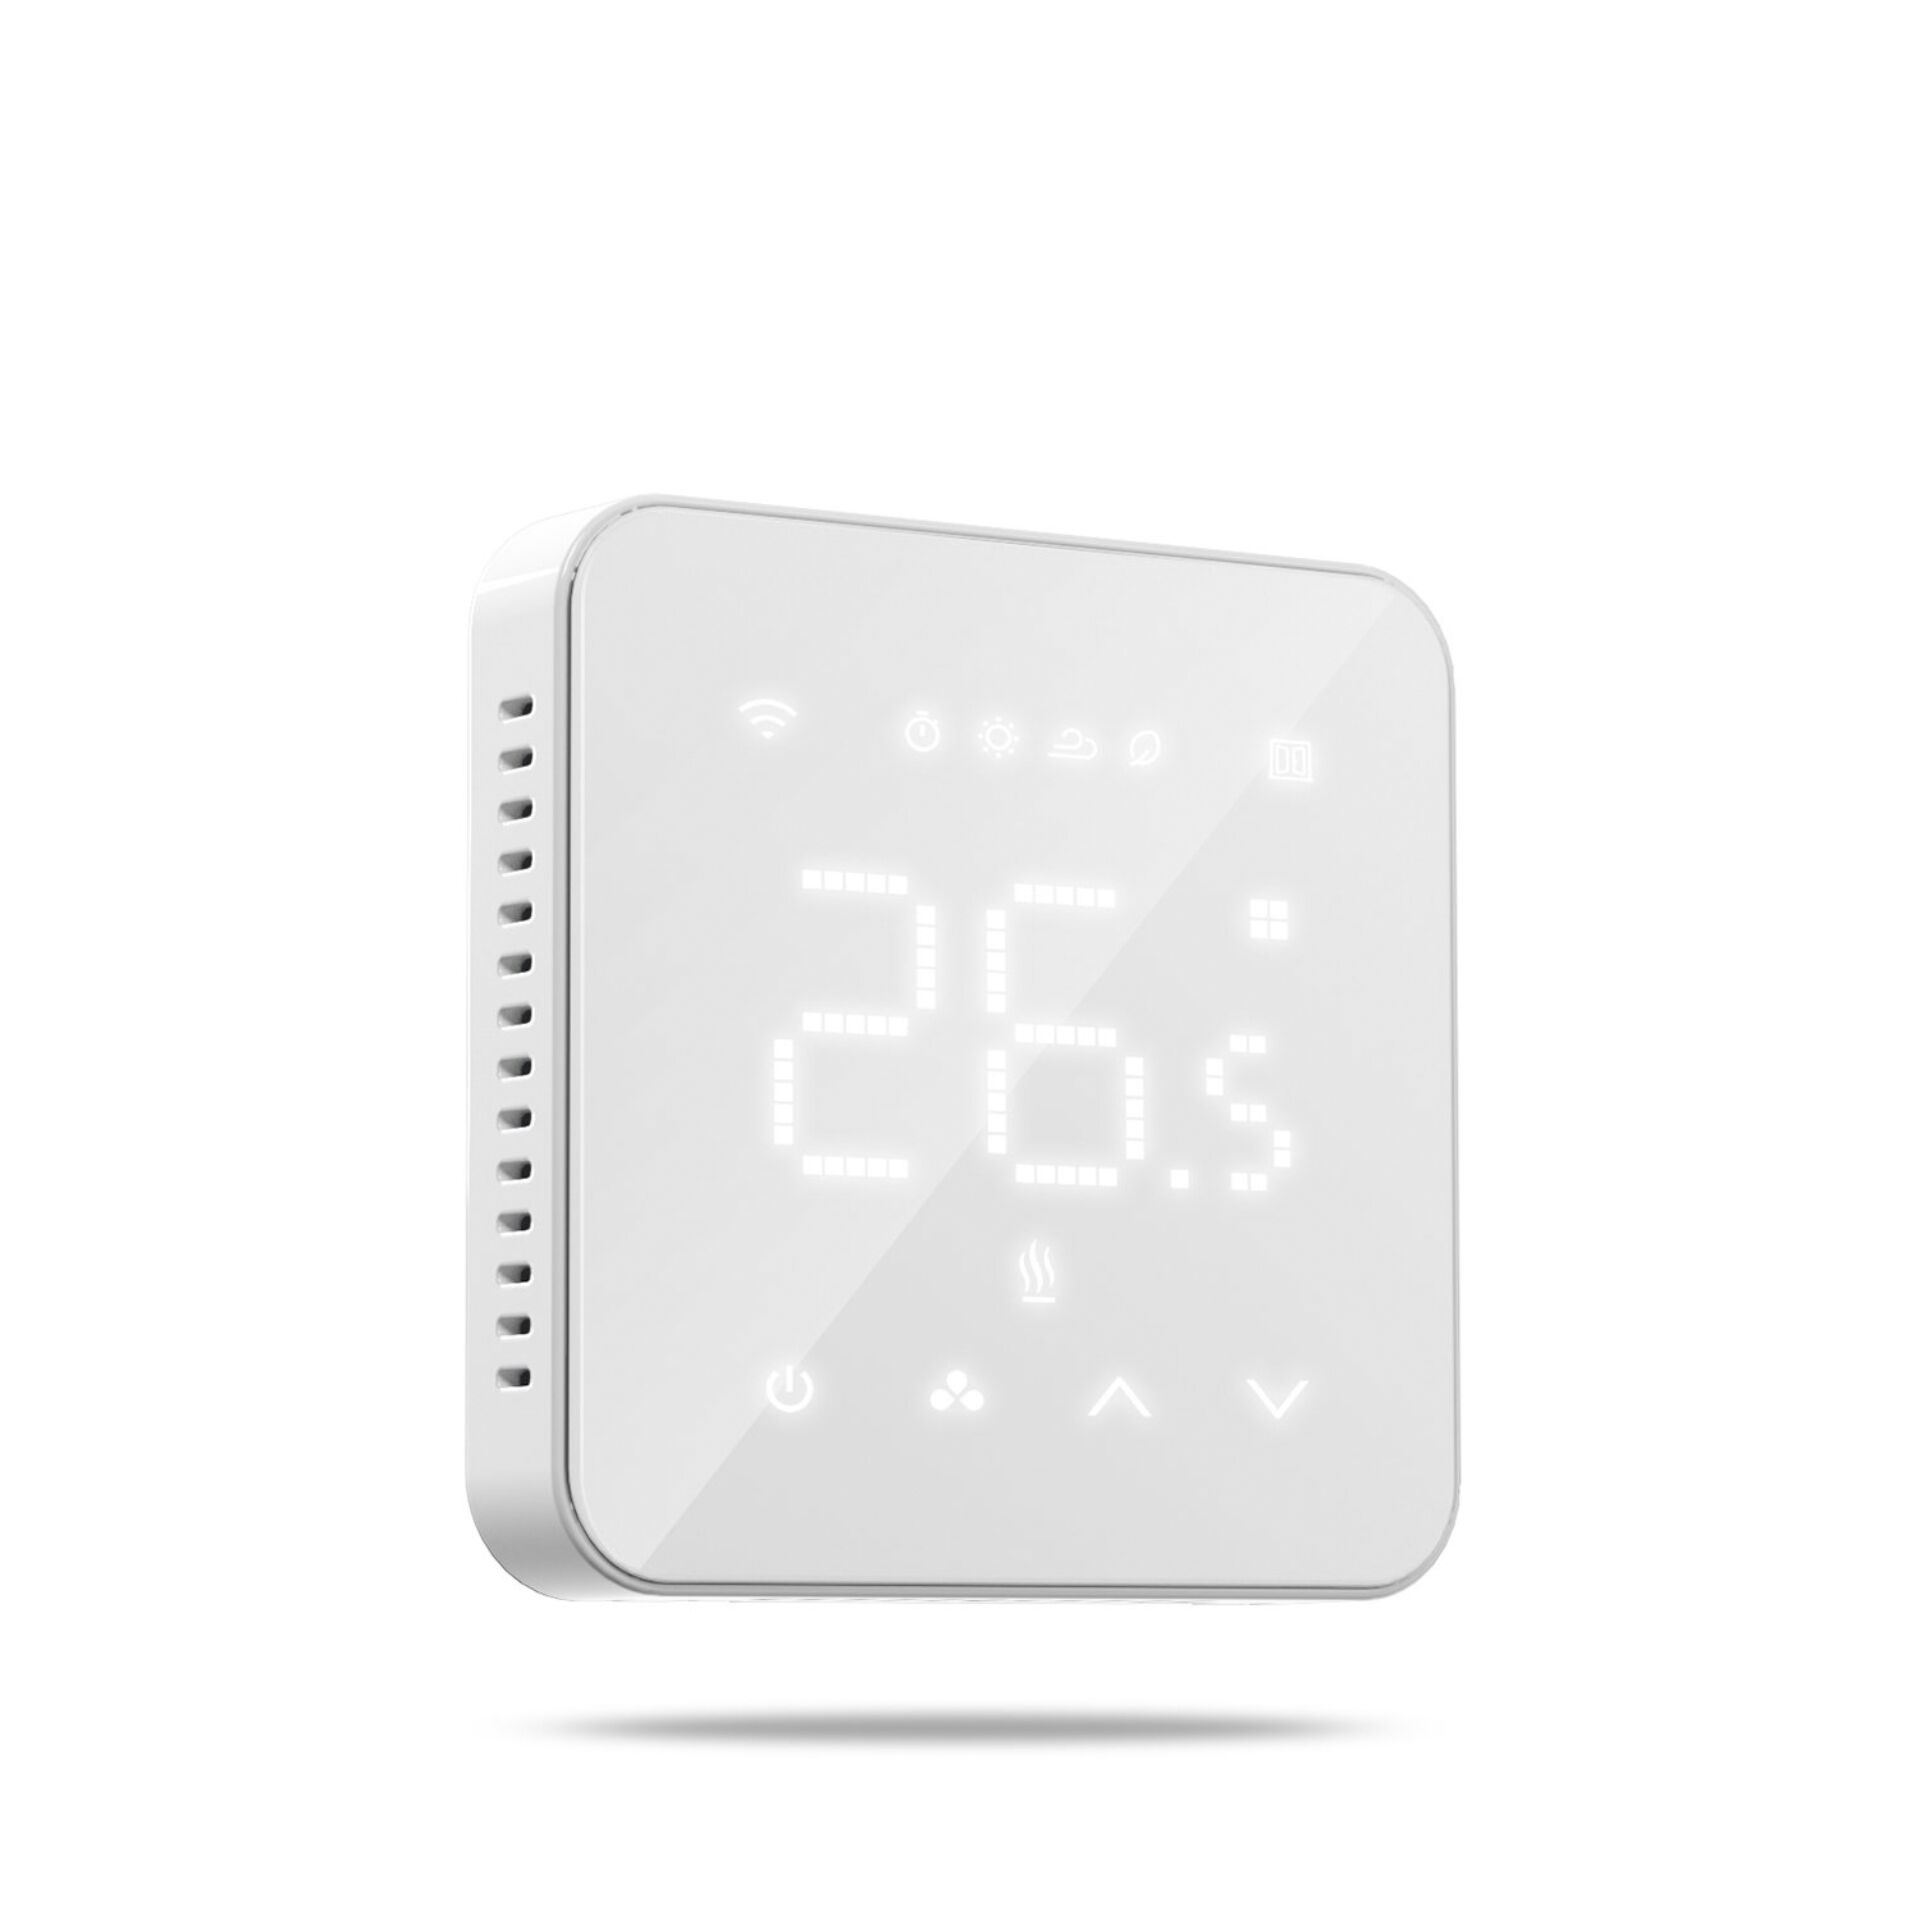 Meross Smart Wi-Fi Thermostat für Fußbodenheizung